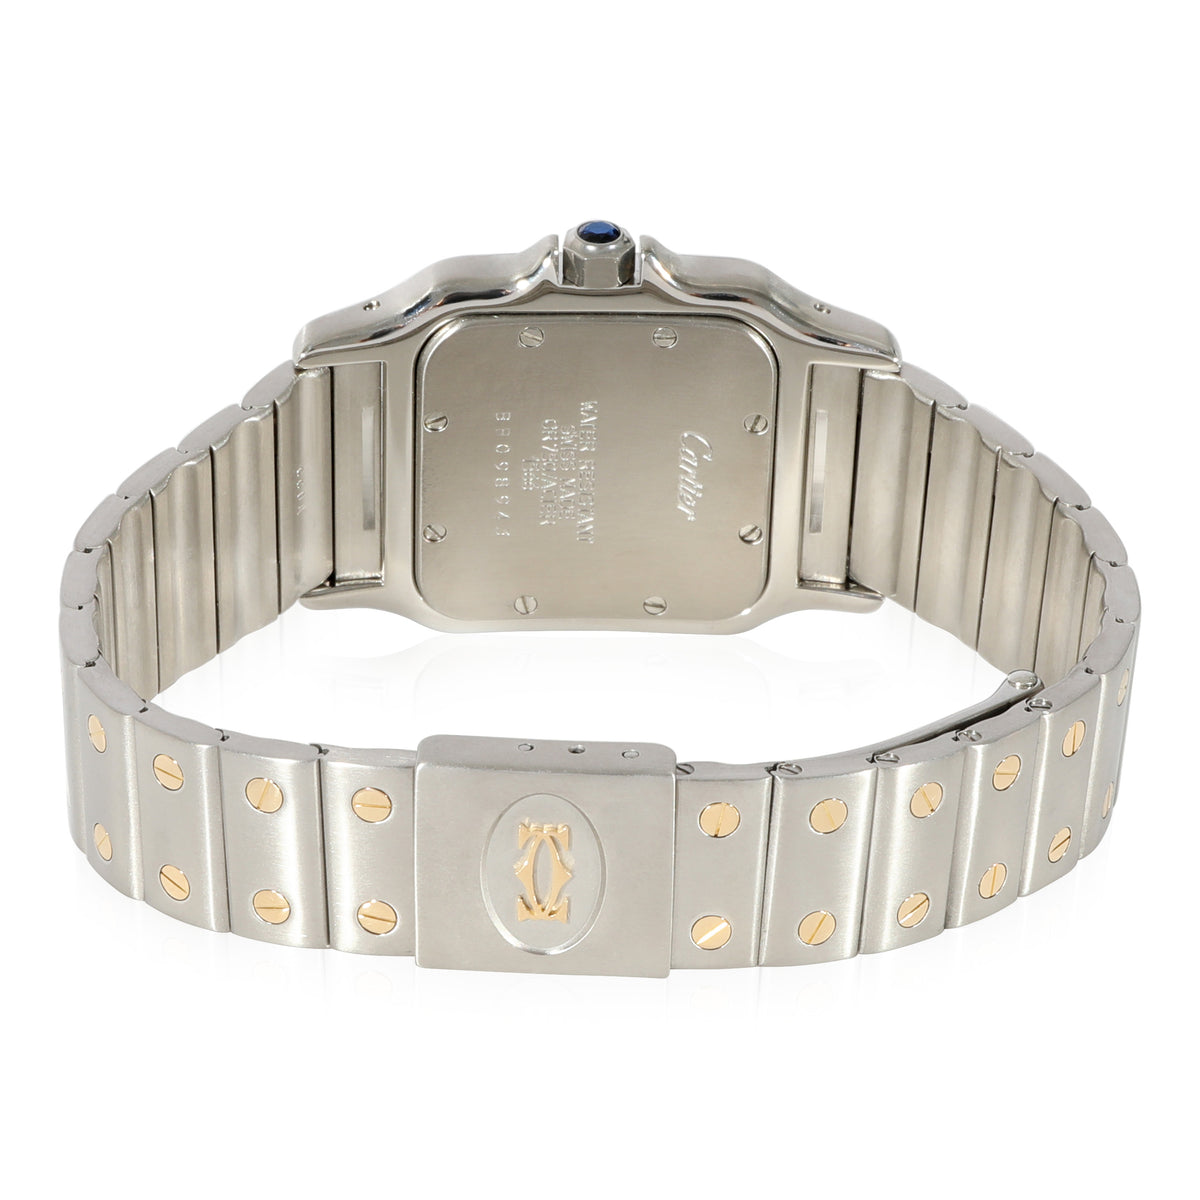 Cartier Santos Galbee 1566 Unisex Watch in 18kt Stainless Steel/Yellow Gold